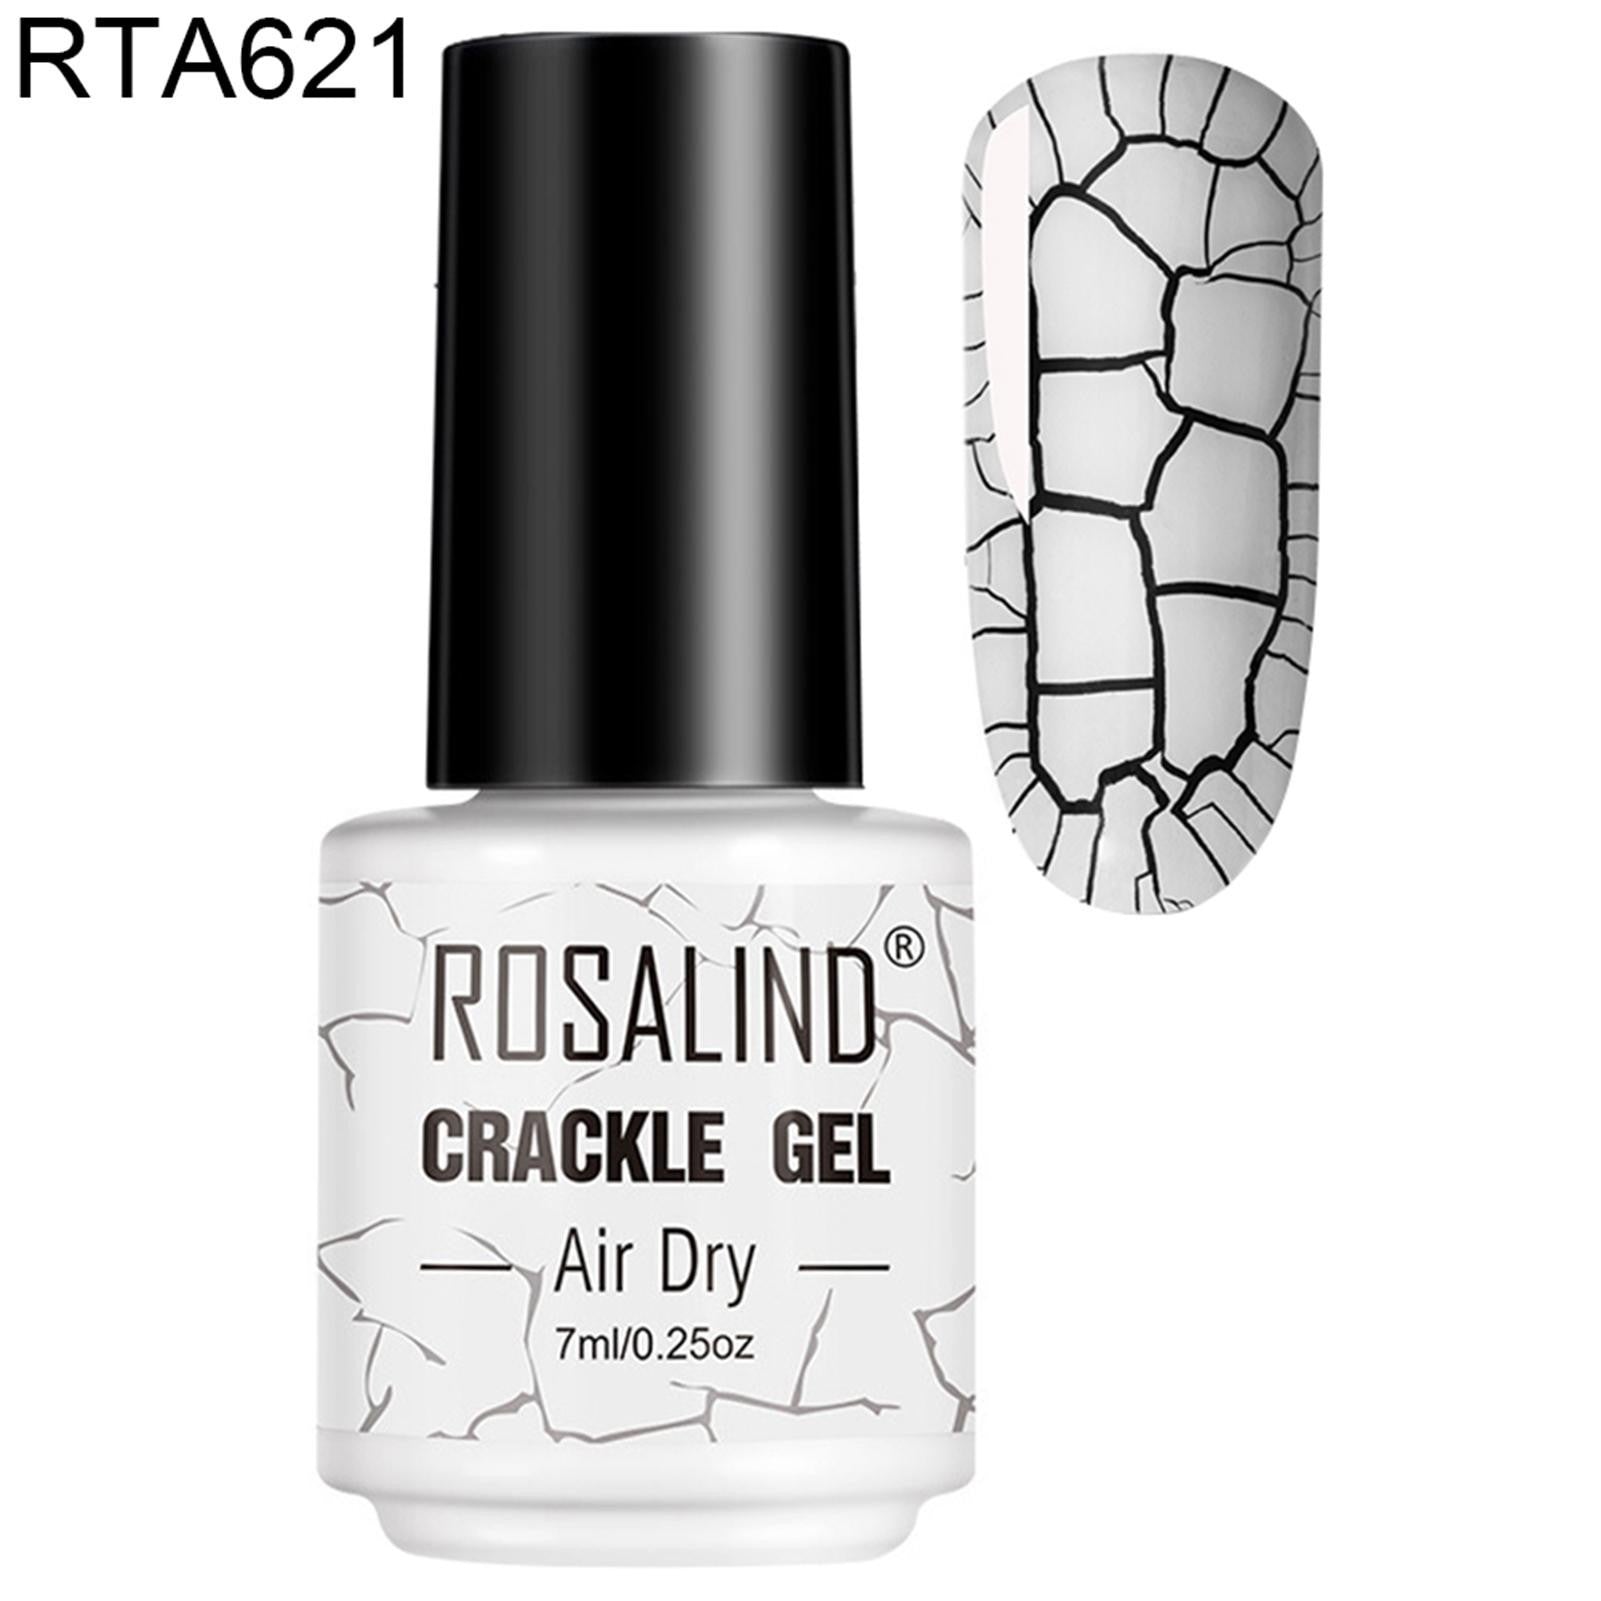 A621 - Rosalind ®